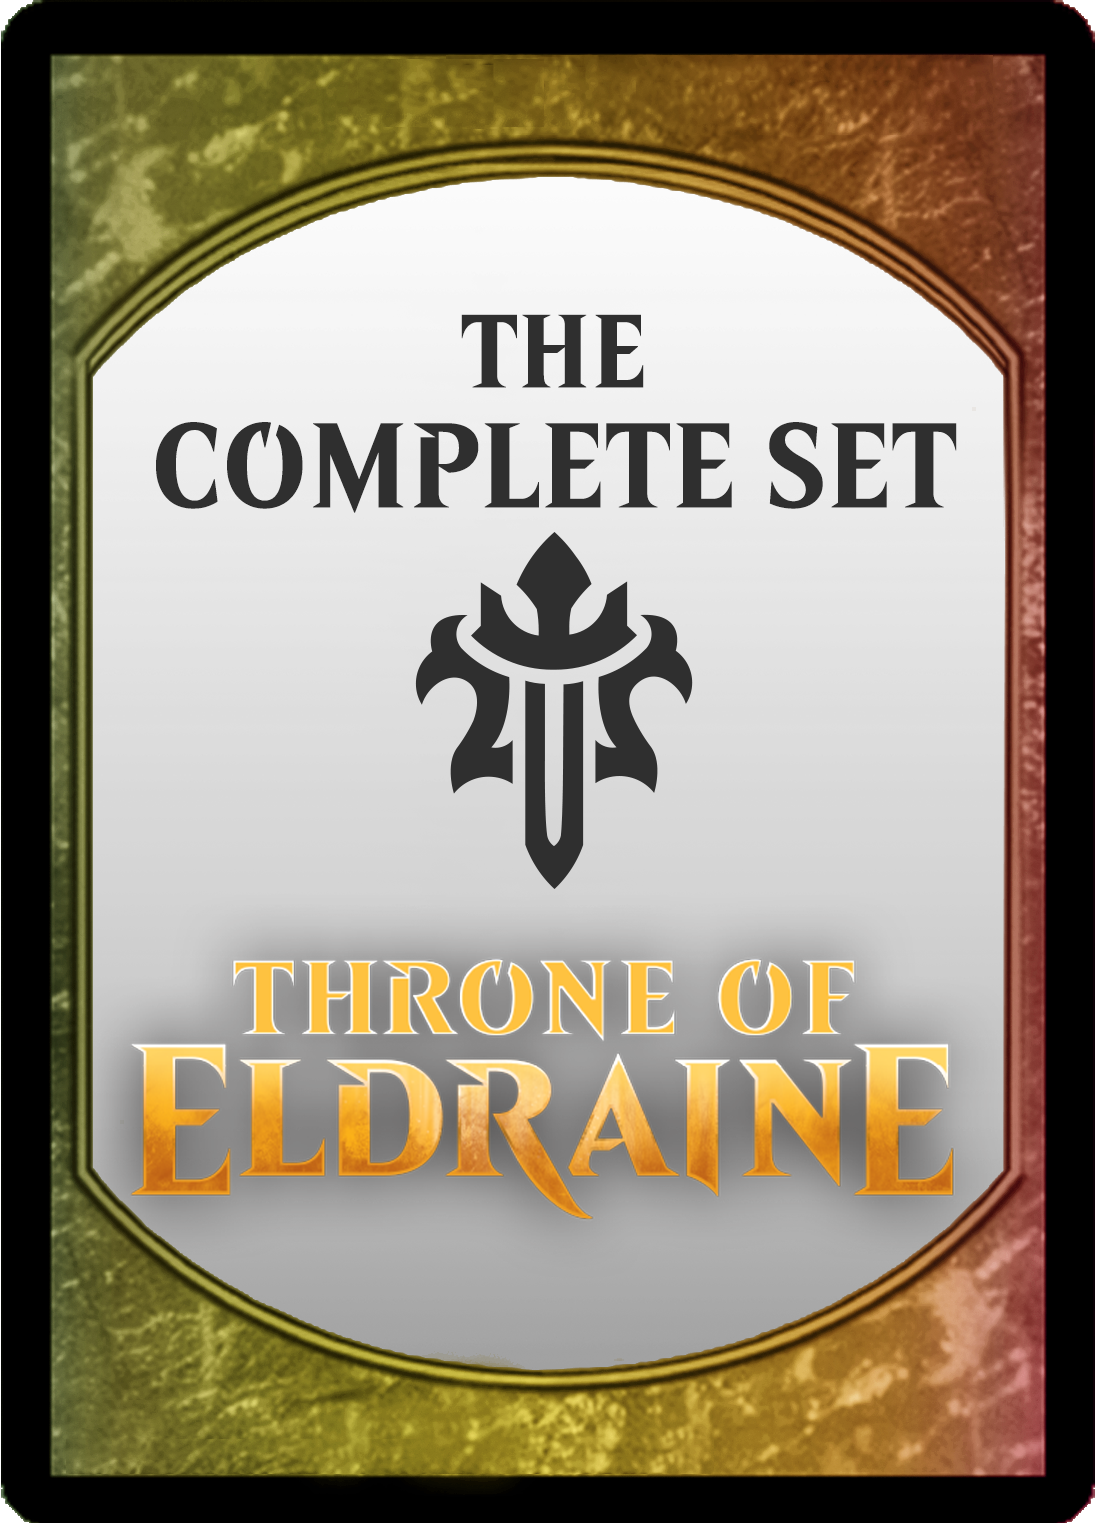 Set completo de Throne of Eldraine